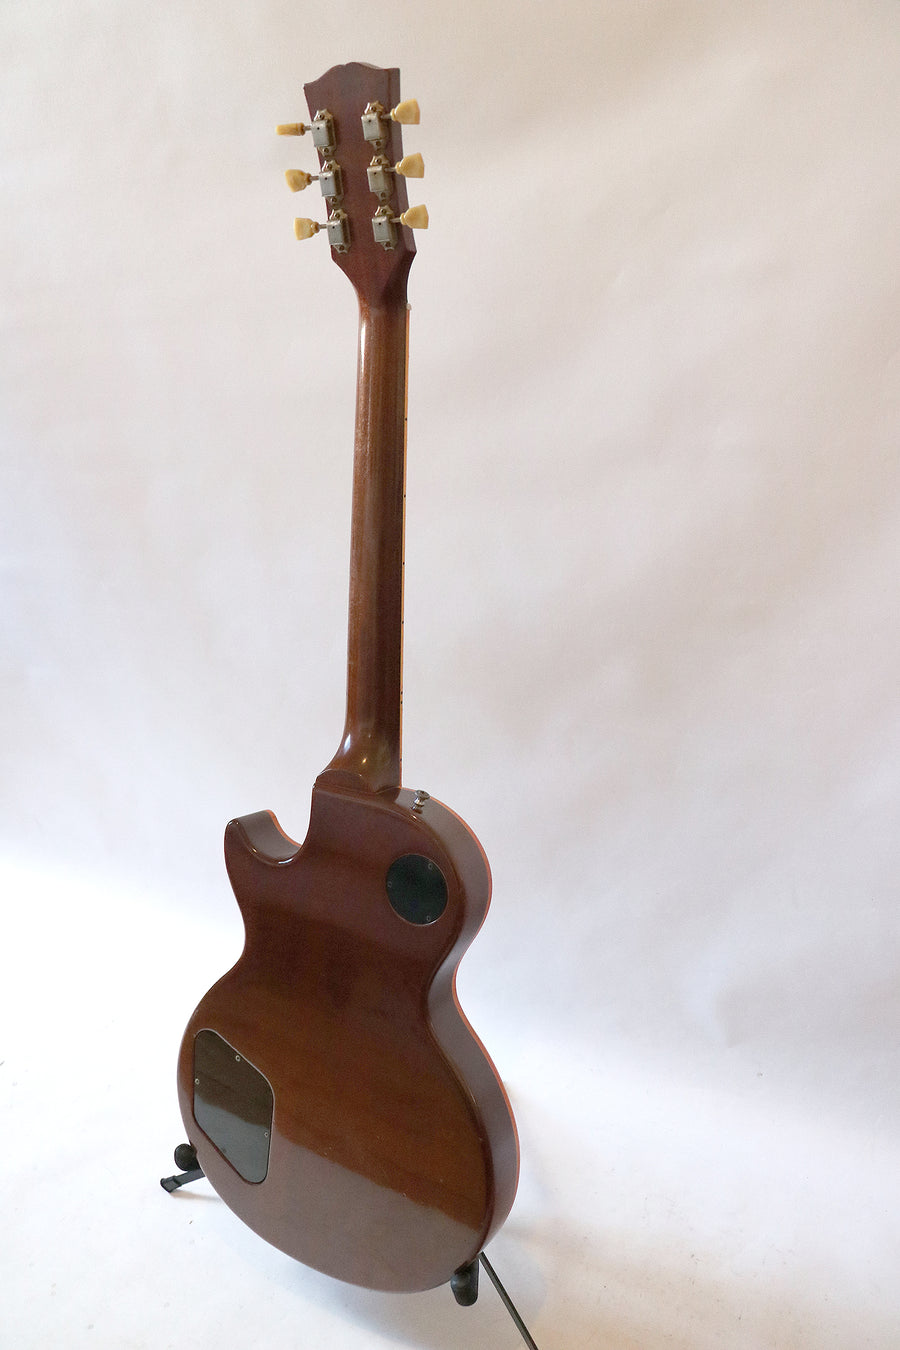 Gibson Les Paul Classic 1990